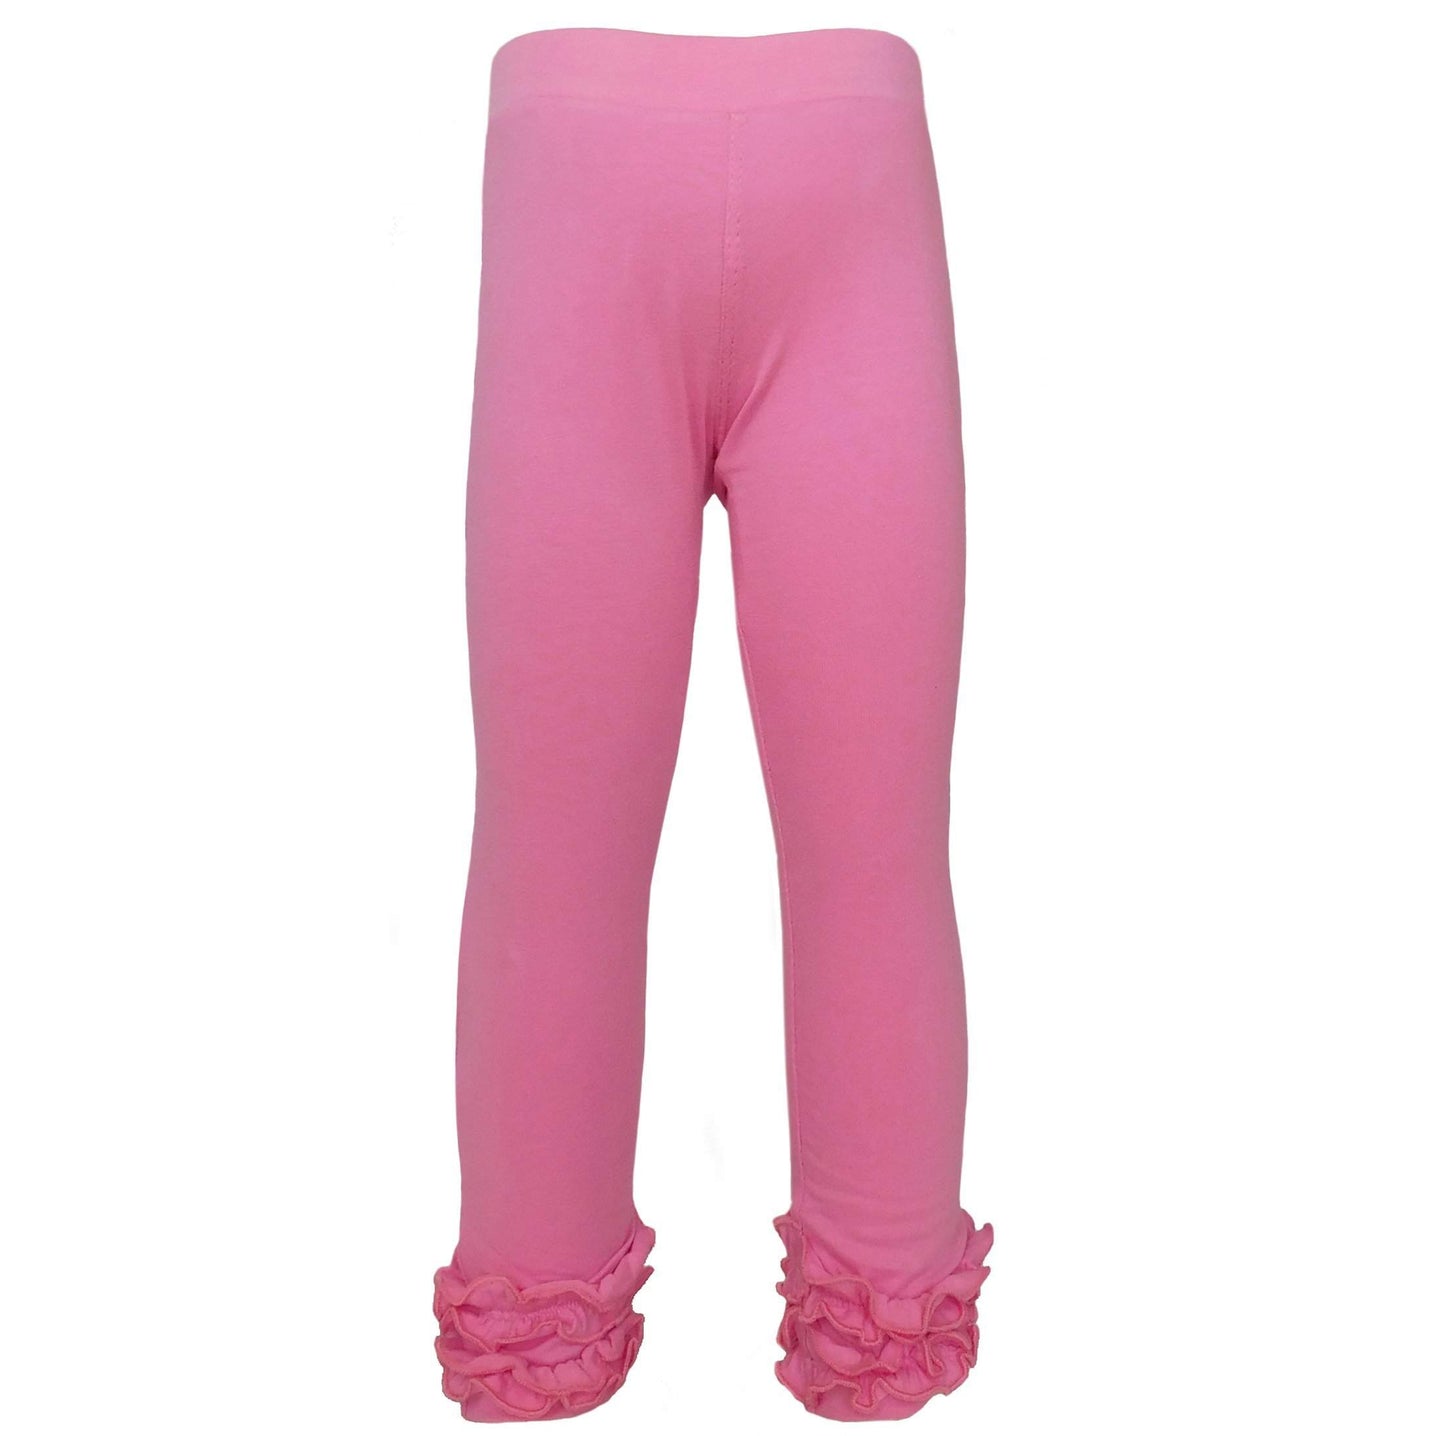 Leggings Pink Ruffle Butt Baby Girls Boutique  Set 6-18m-AnnLoren-12-18 Mo,6-12 Mo,ANNLOREN,Baby Leggings,Fall & Winter,Fall & Winter 2020,Pink